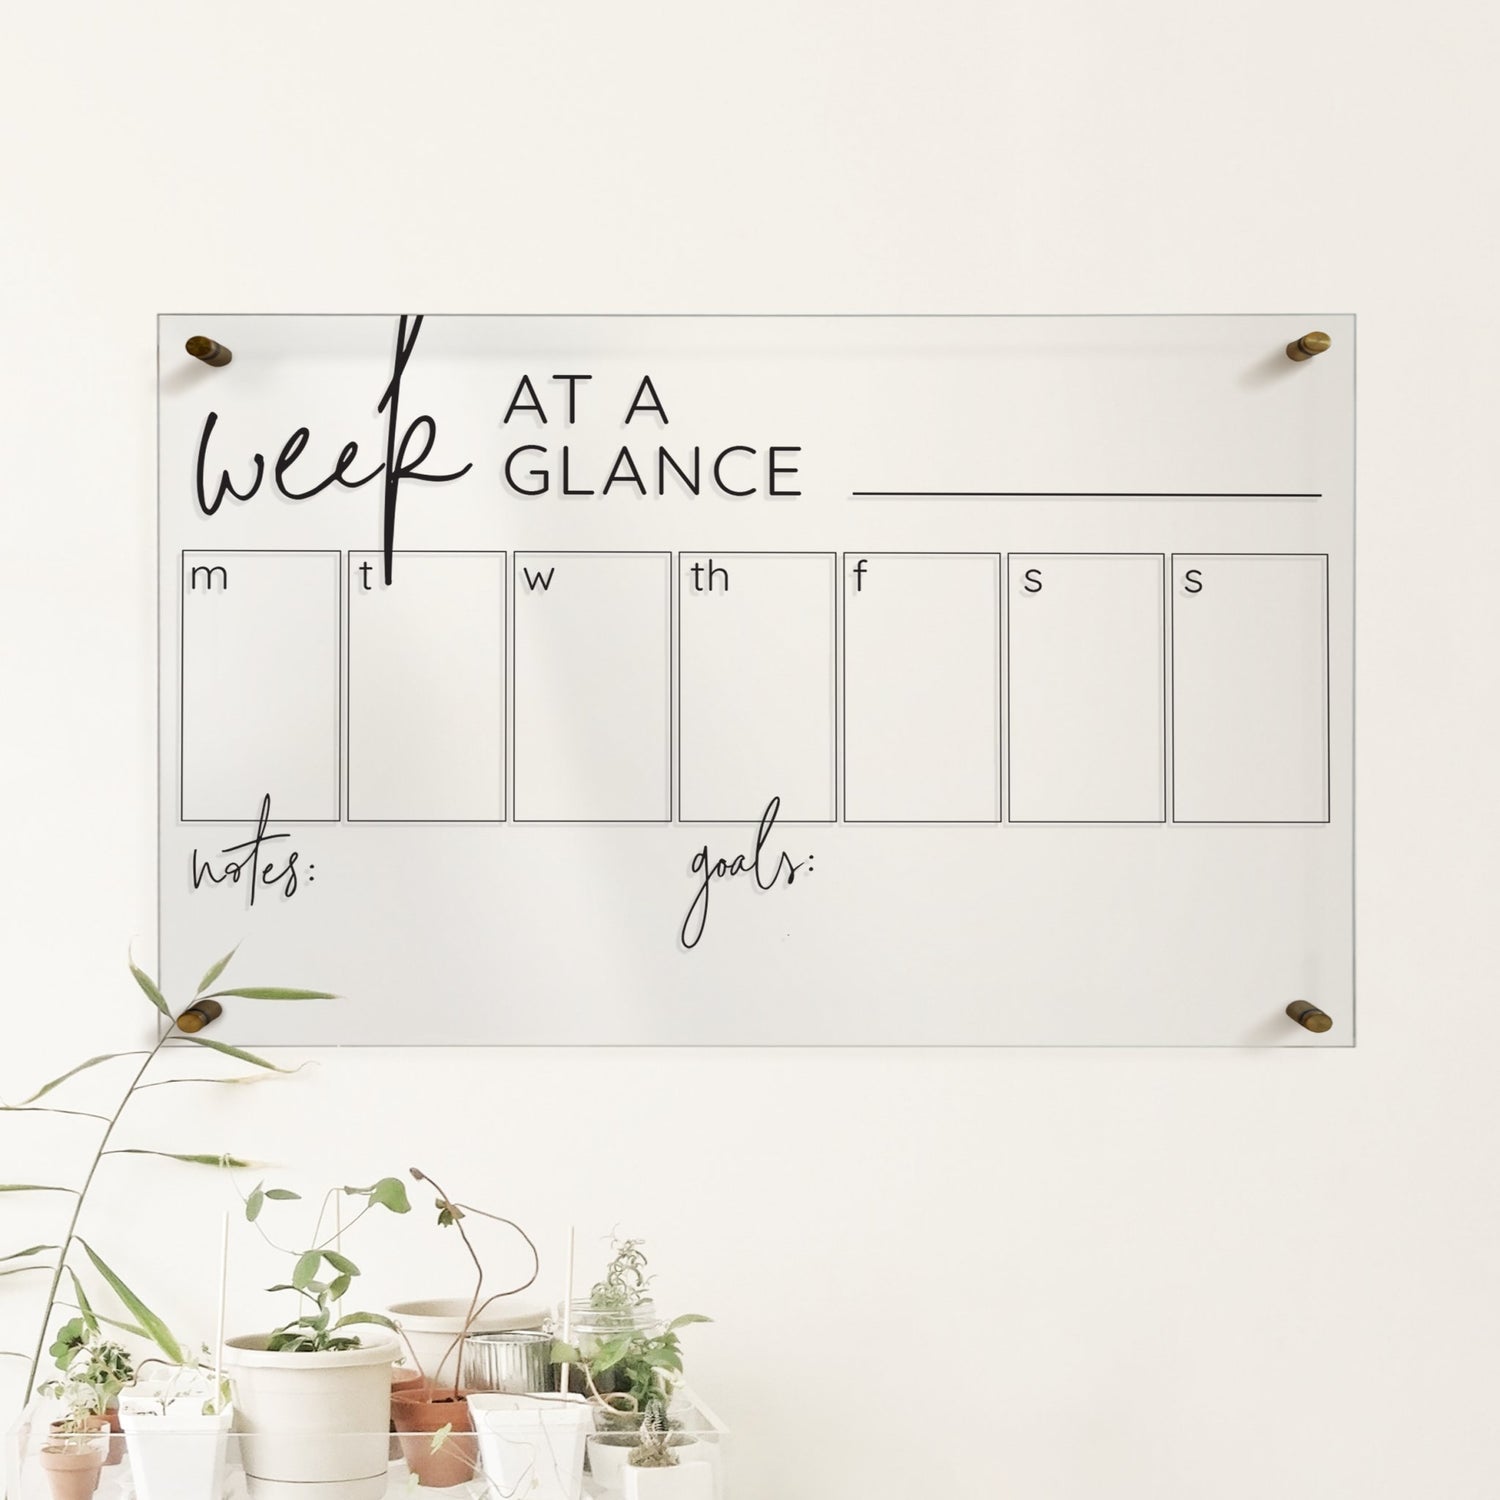 Acrylic Weekly Calendar Board For Wall | Weekly Perpetual Calendar Dry Erase | Minimal Office Decor - SCC-315 - SCC Signs